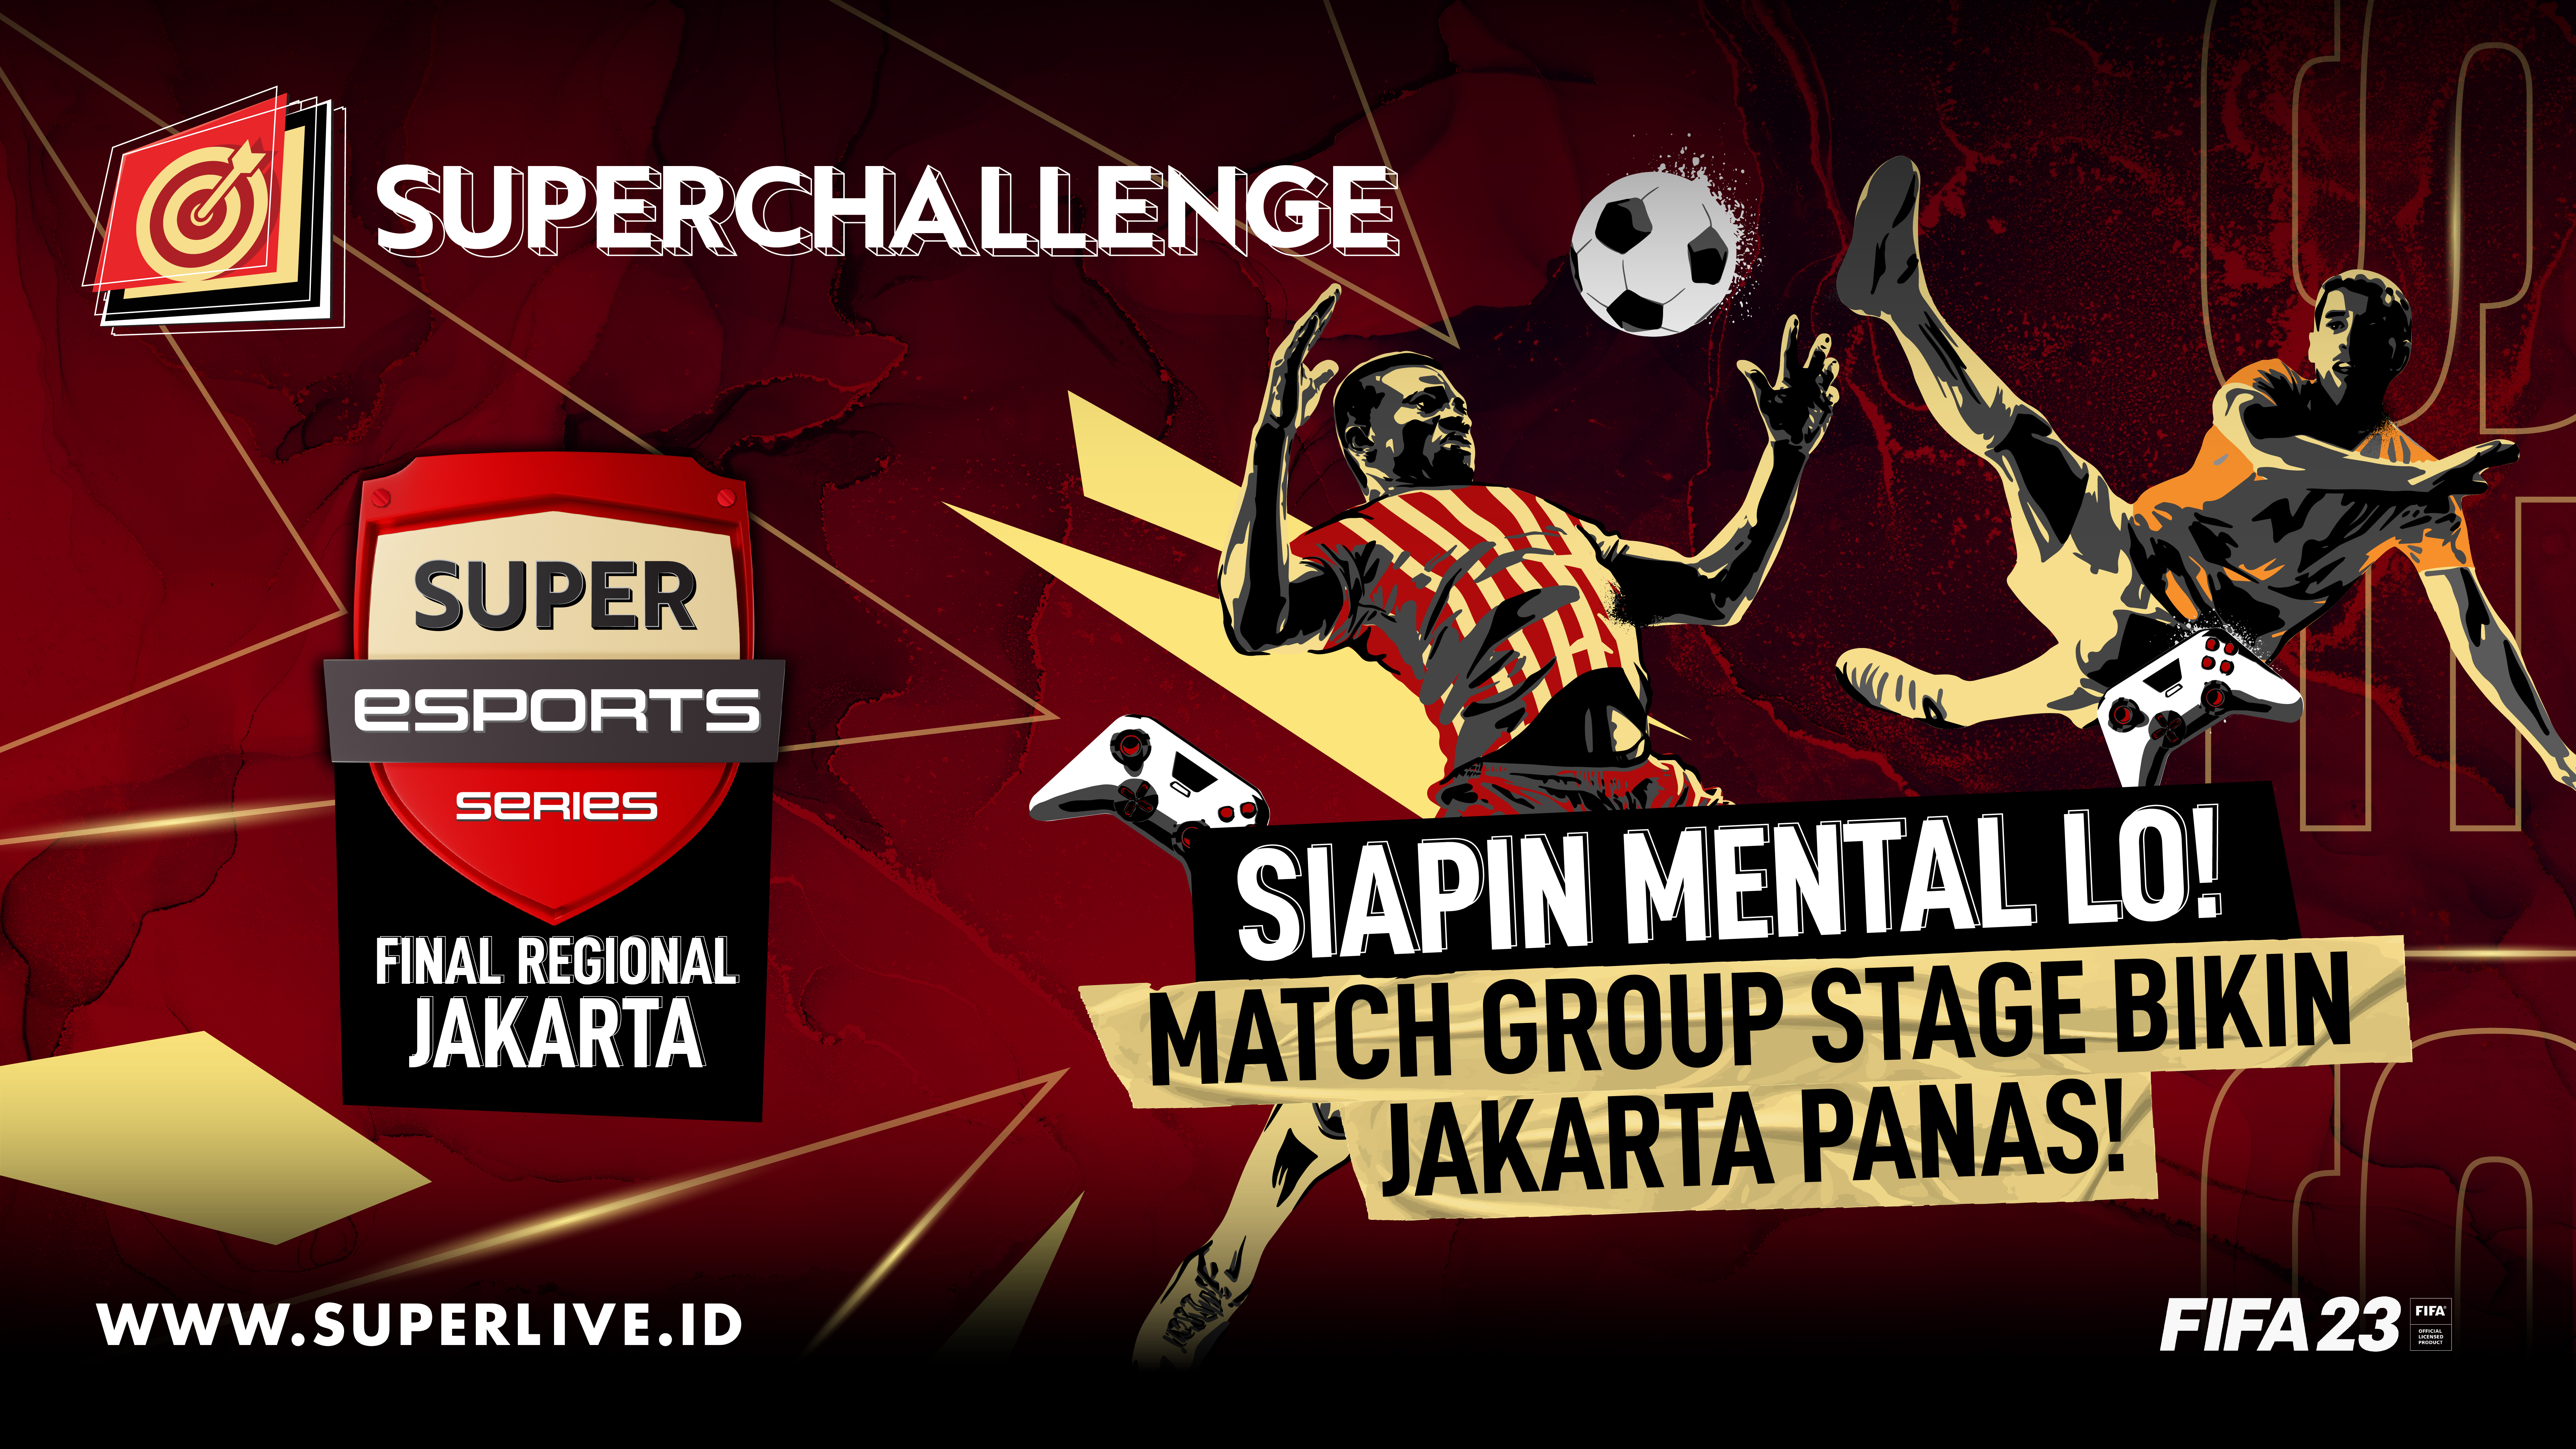 Jakarta Panas? Group Stage Super Esports Series FIFA 2023 Final Regional Jakarta Lebih Panas!